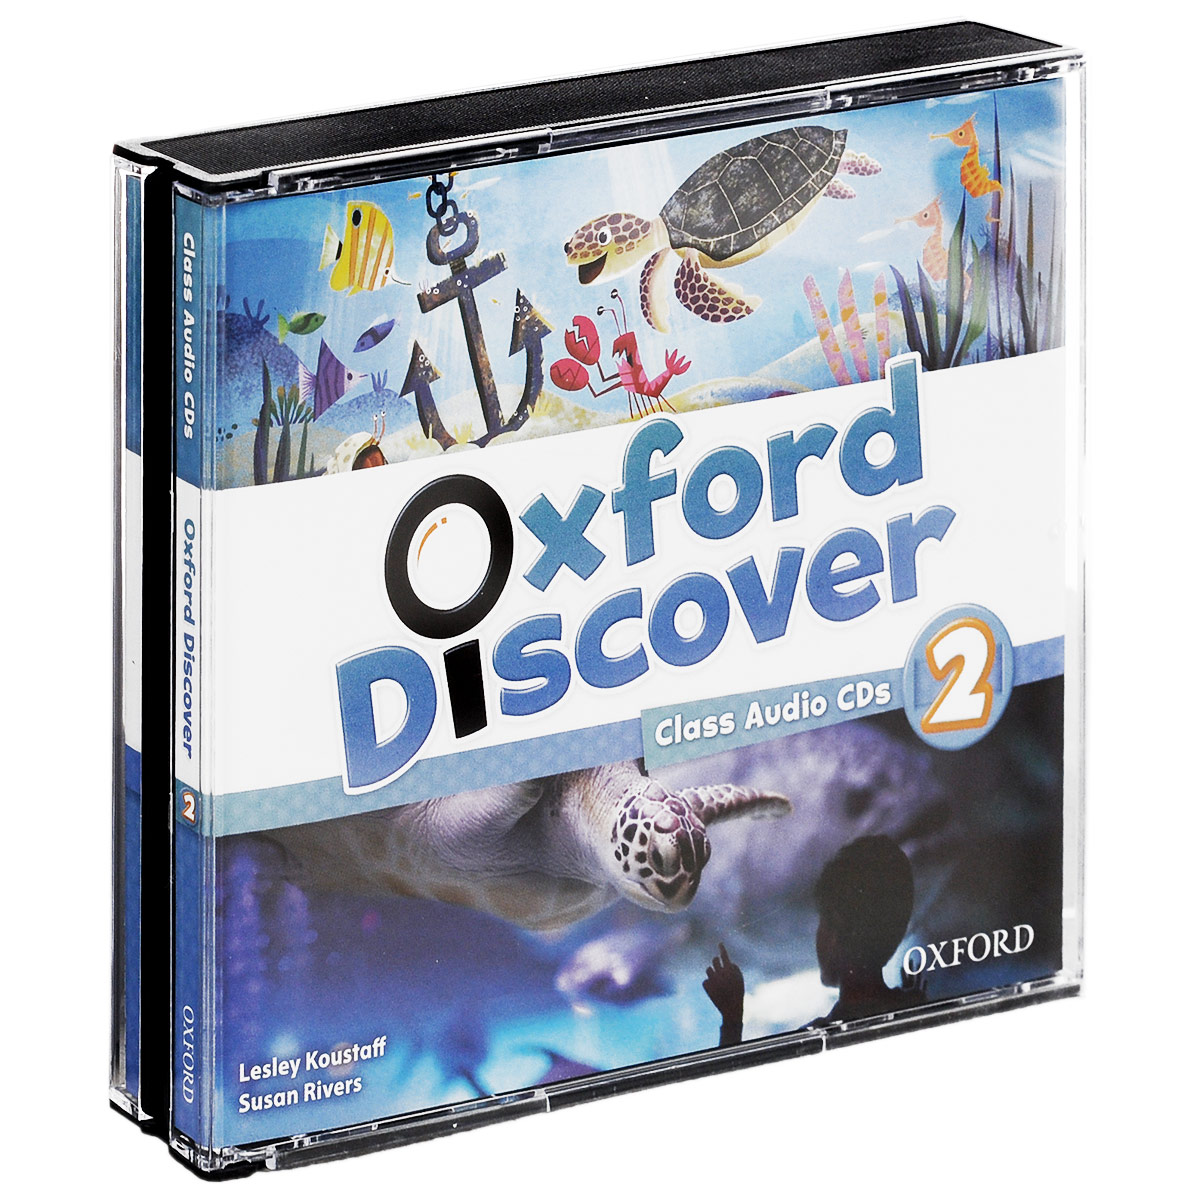 Oxford discover audio. Oxford discover: 6. Oxford discover 2. Oxford discover 6 student book. Oxford discover 2 student book.